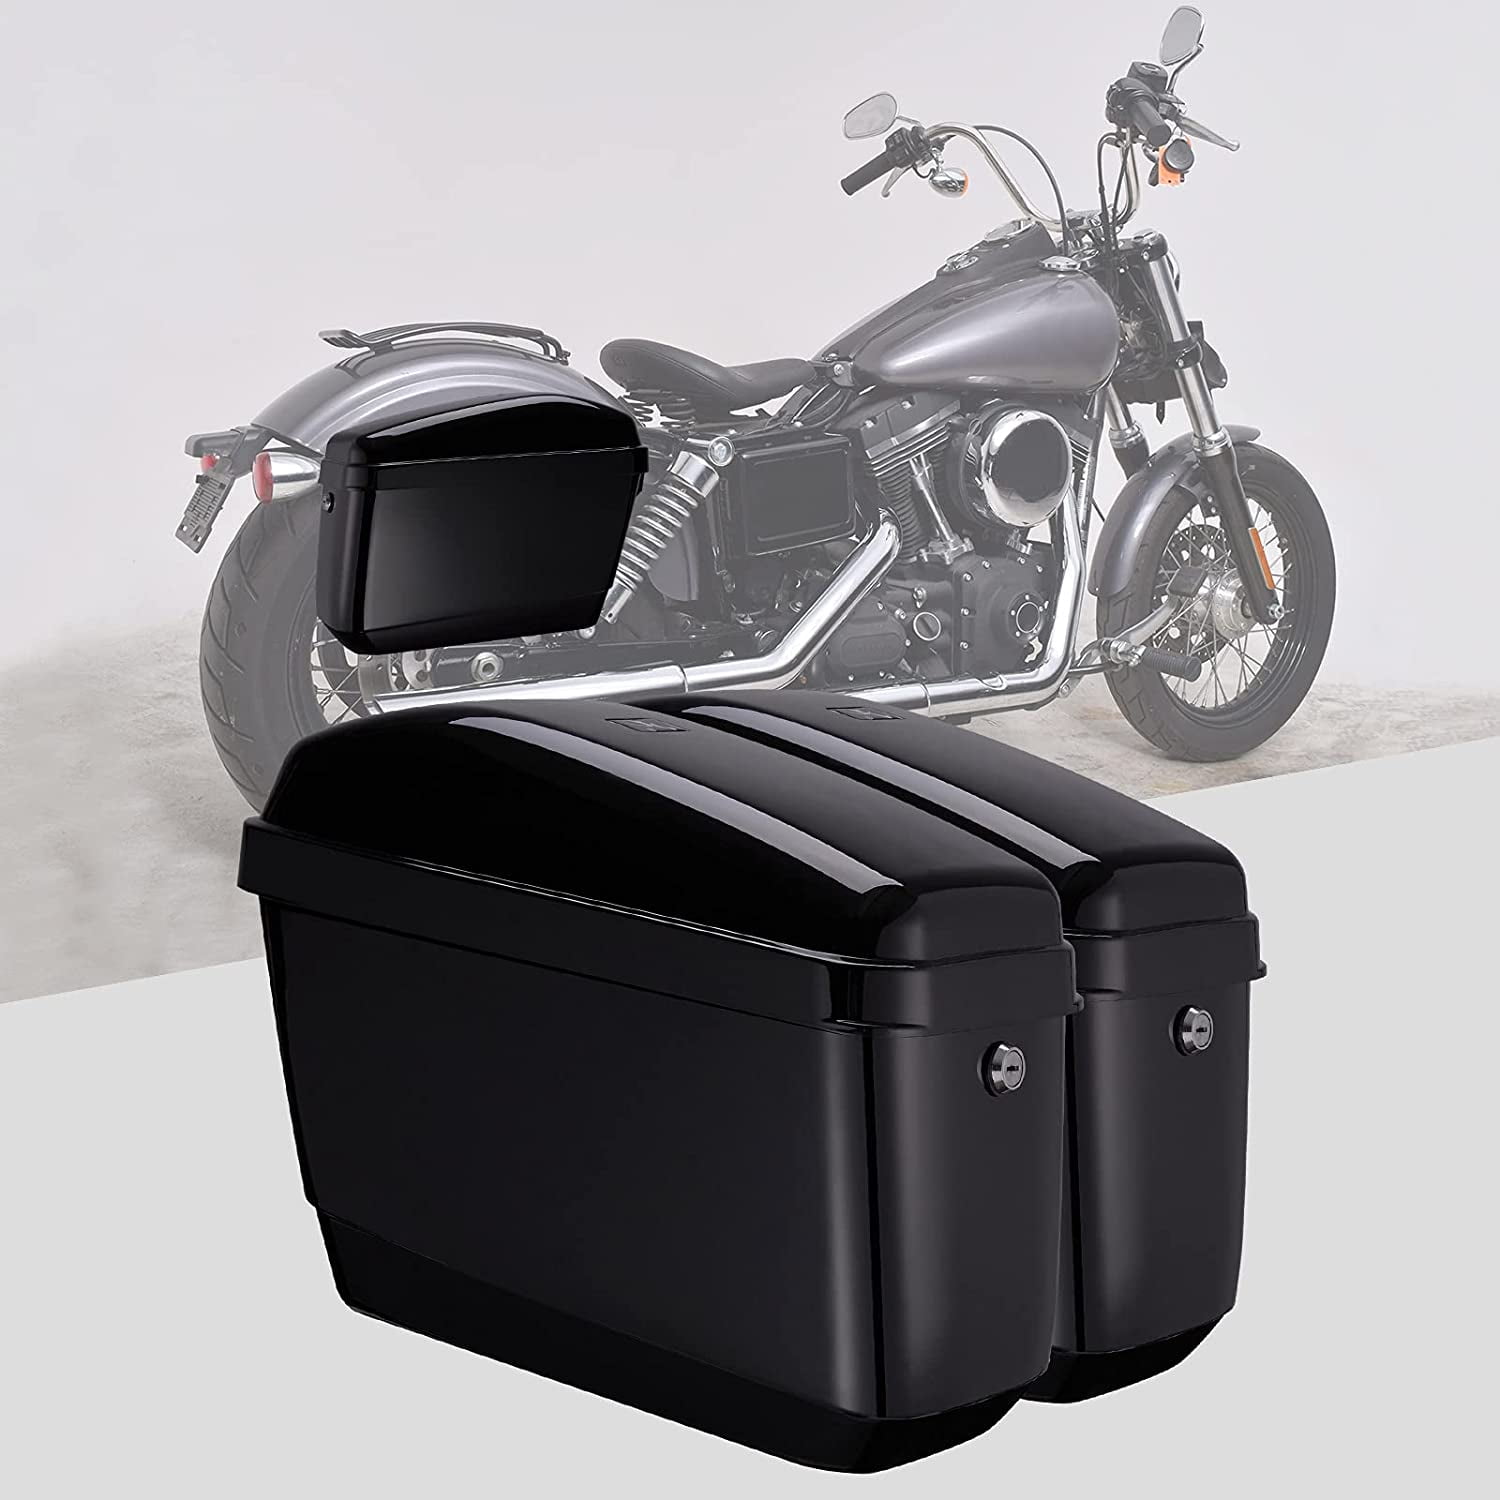 Kemimoto Motorcycle Hard Saddlebags Hard Saddle Bags Compatible with ...